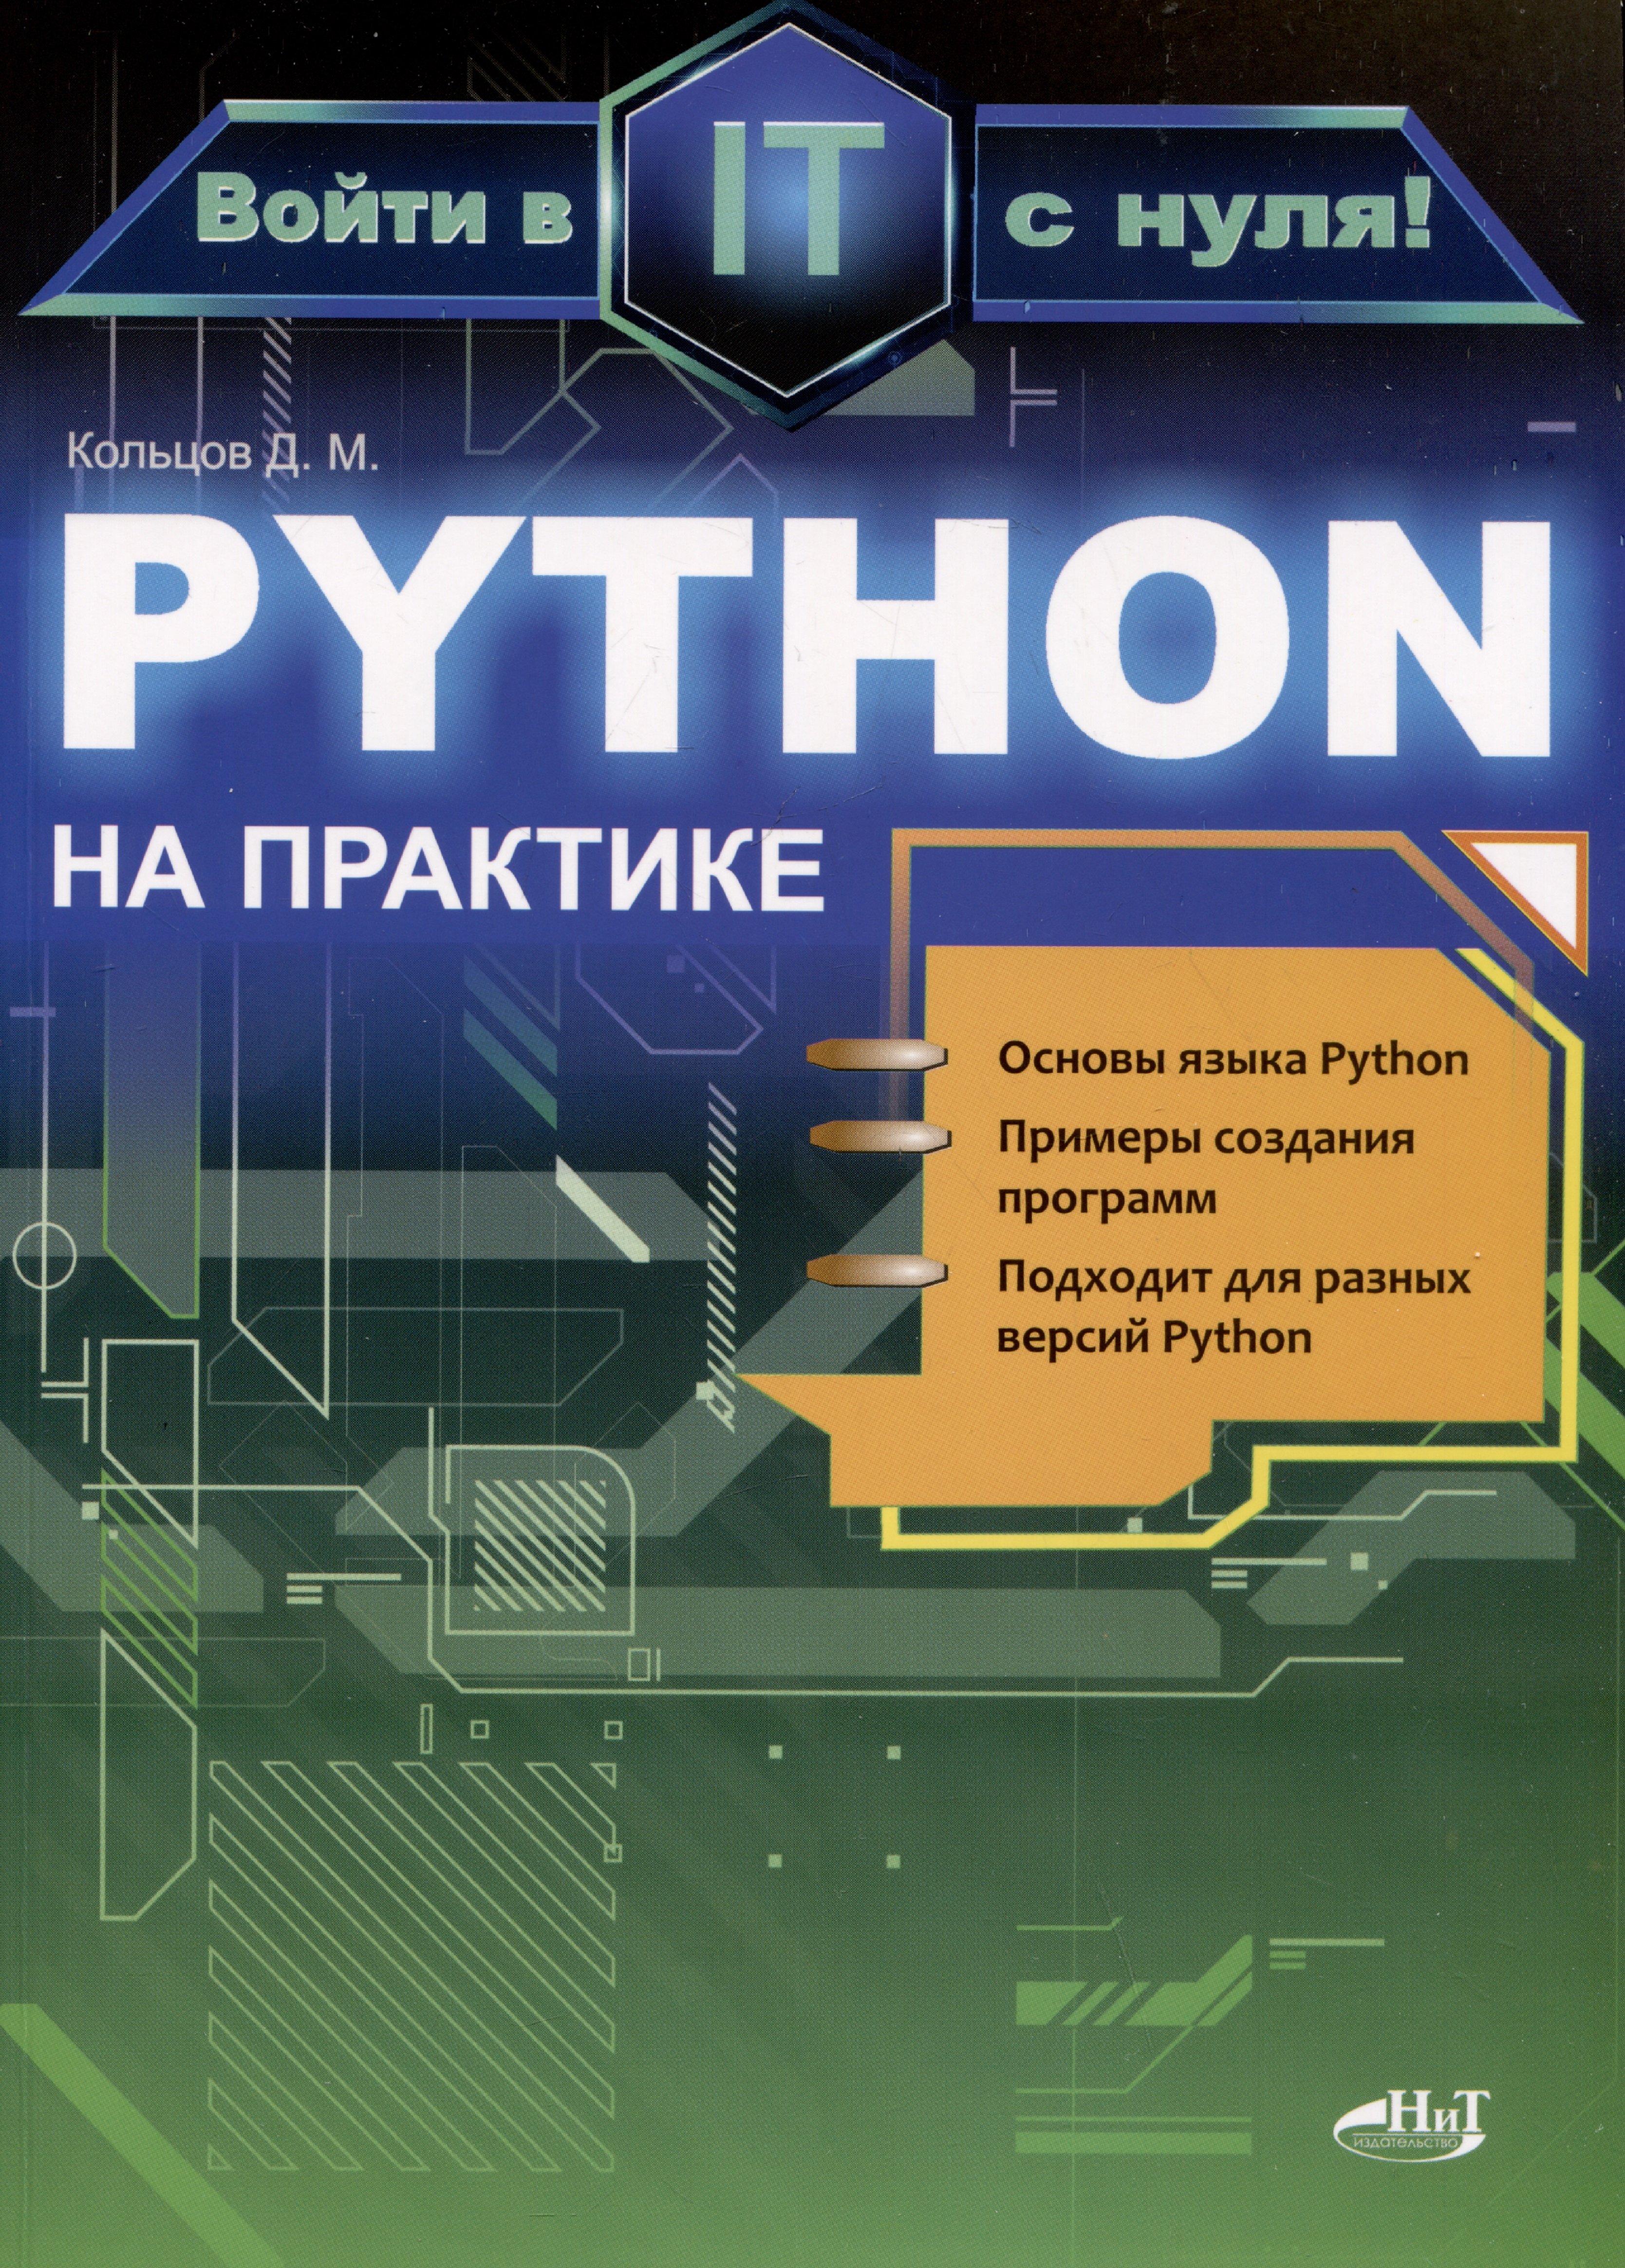 Python  .   IT  